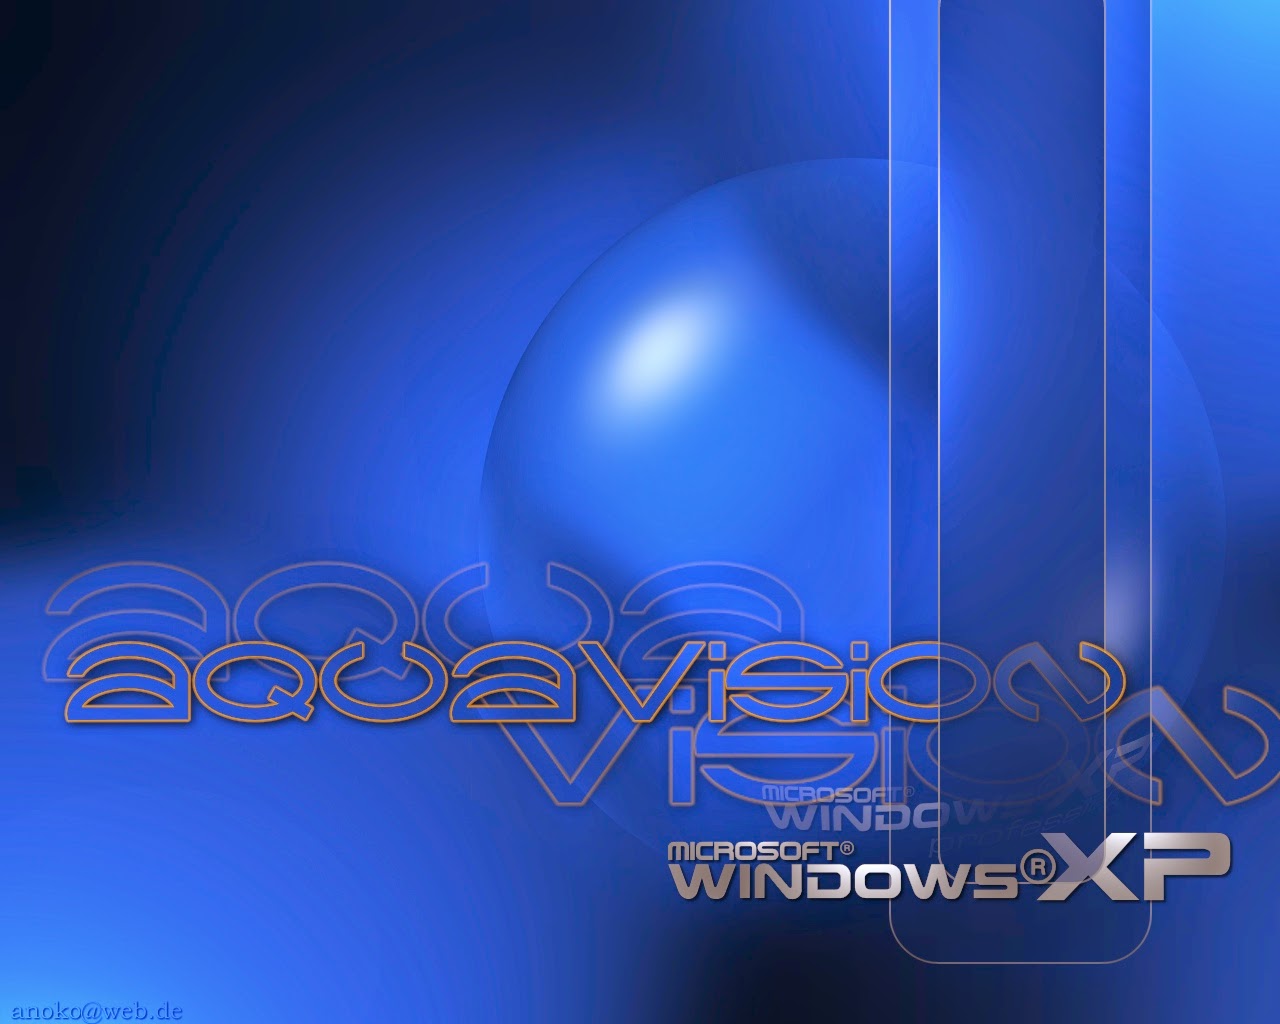 Windows Xp Hd Wallpapers,Windows Xp Pictures,Windows Xp Images ...